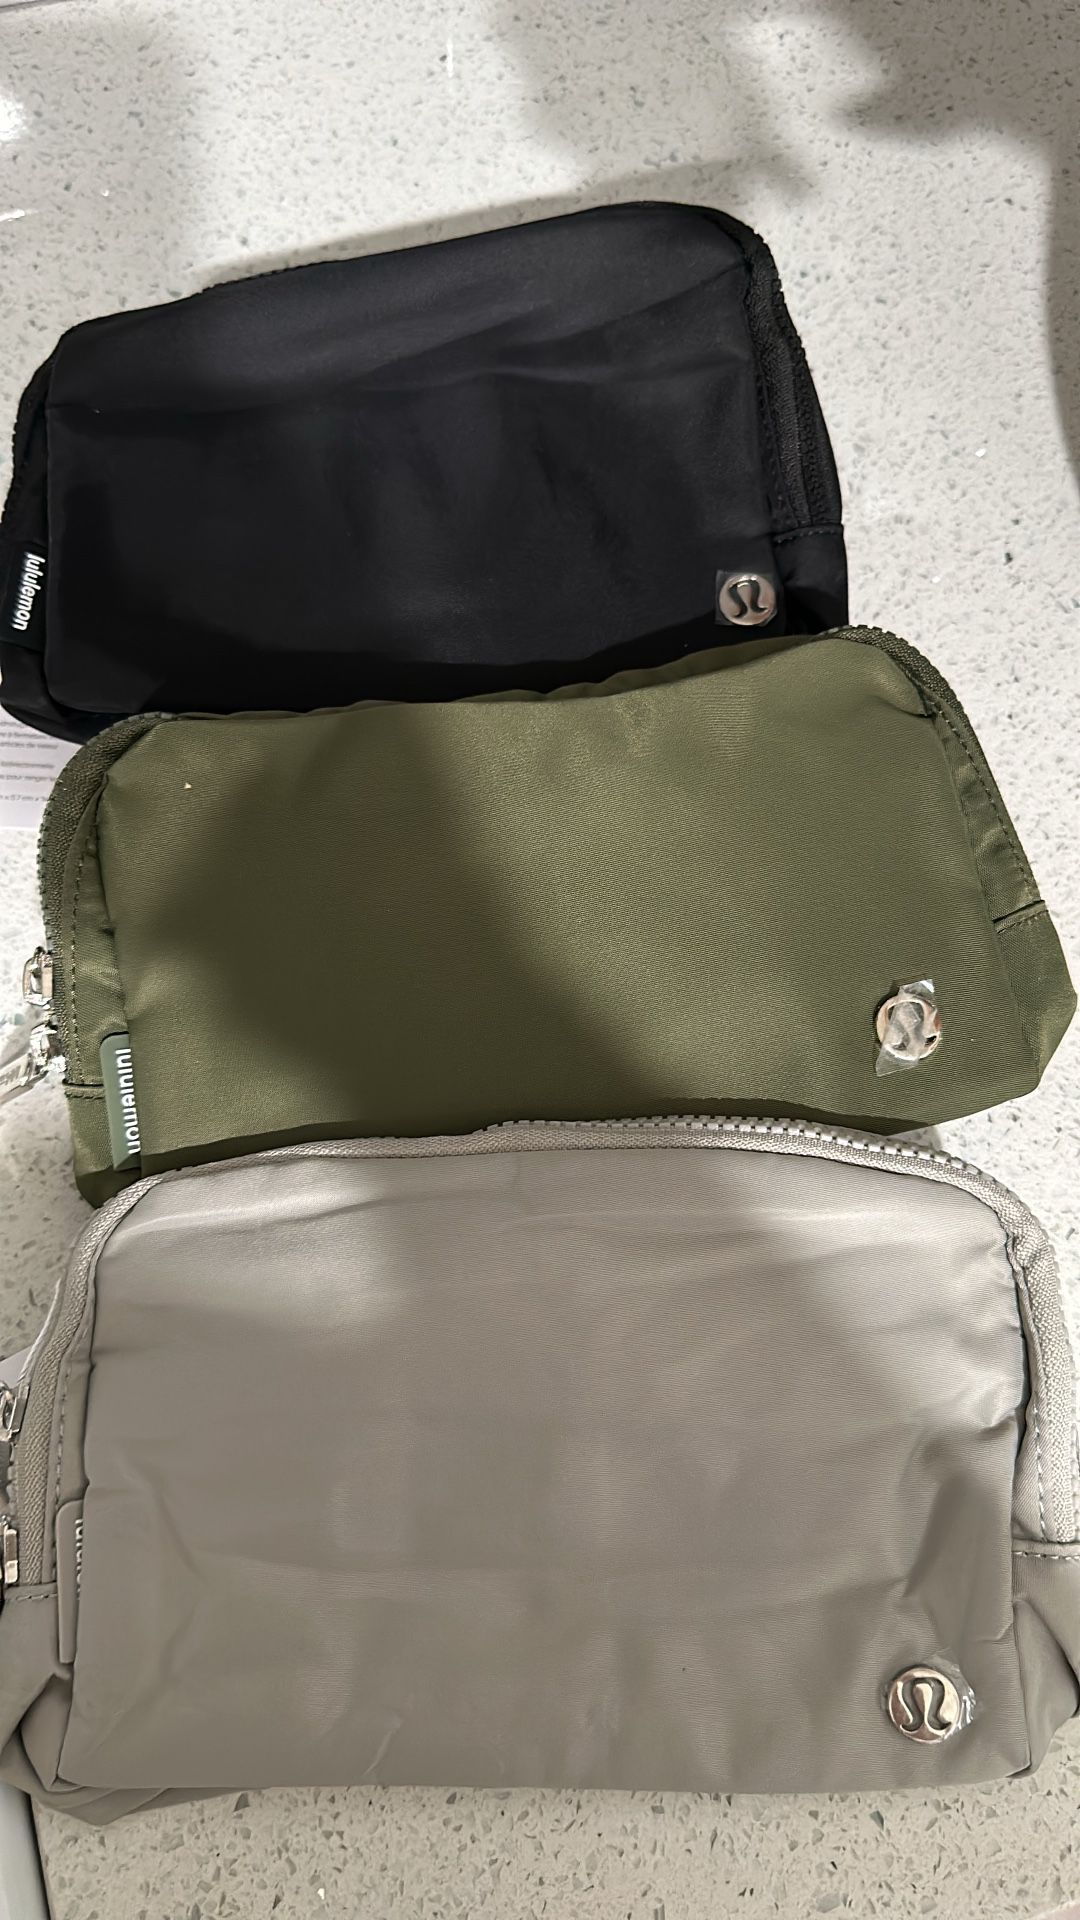 Lululemon Belt Bags And Backpacks 